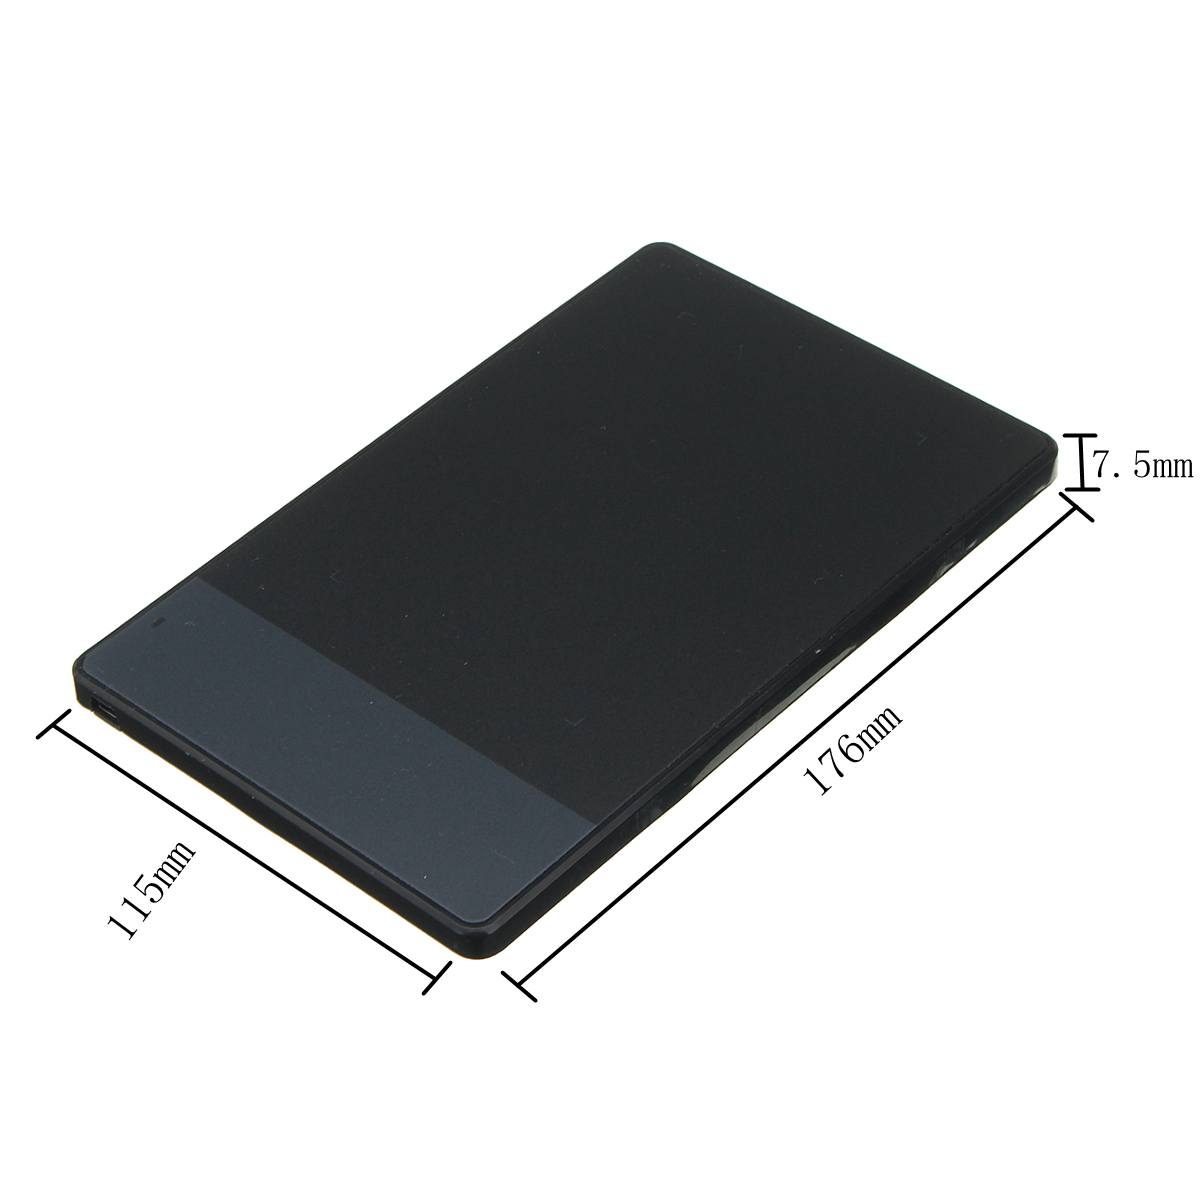 Huion-420-4quot-x-223quot-USB-Art-Design-Graphics-Tablet-Drawing-Pad-with-Digital-Pen-1294874